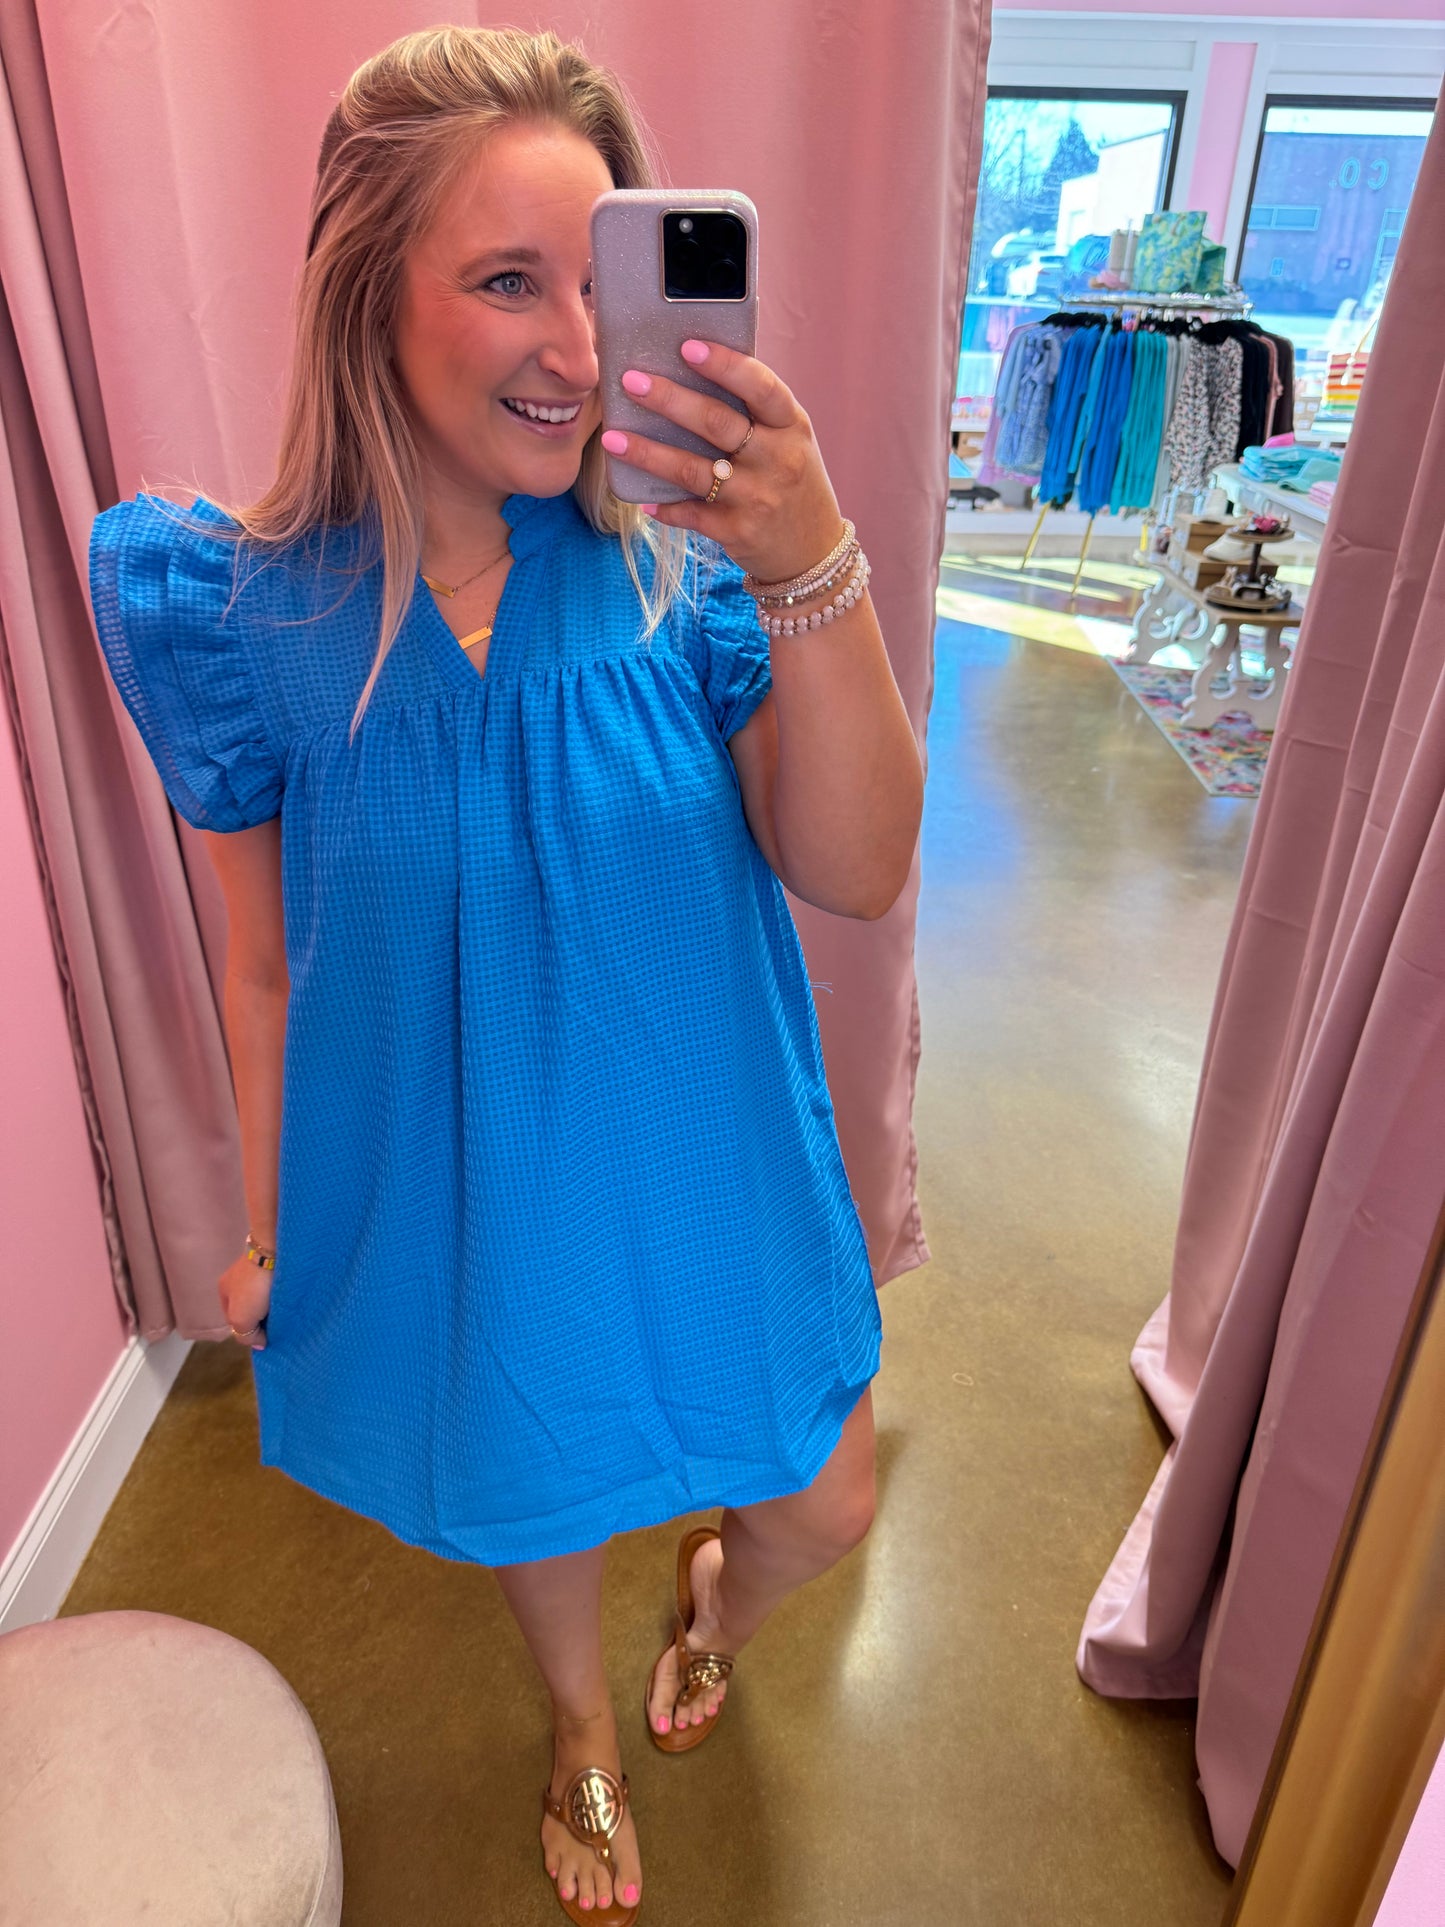 Malibu Blue Dress